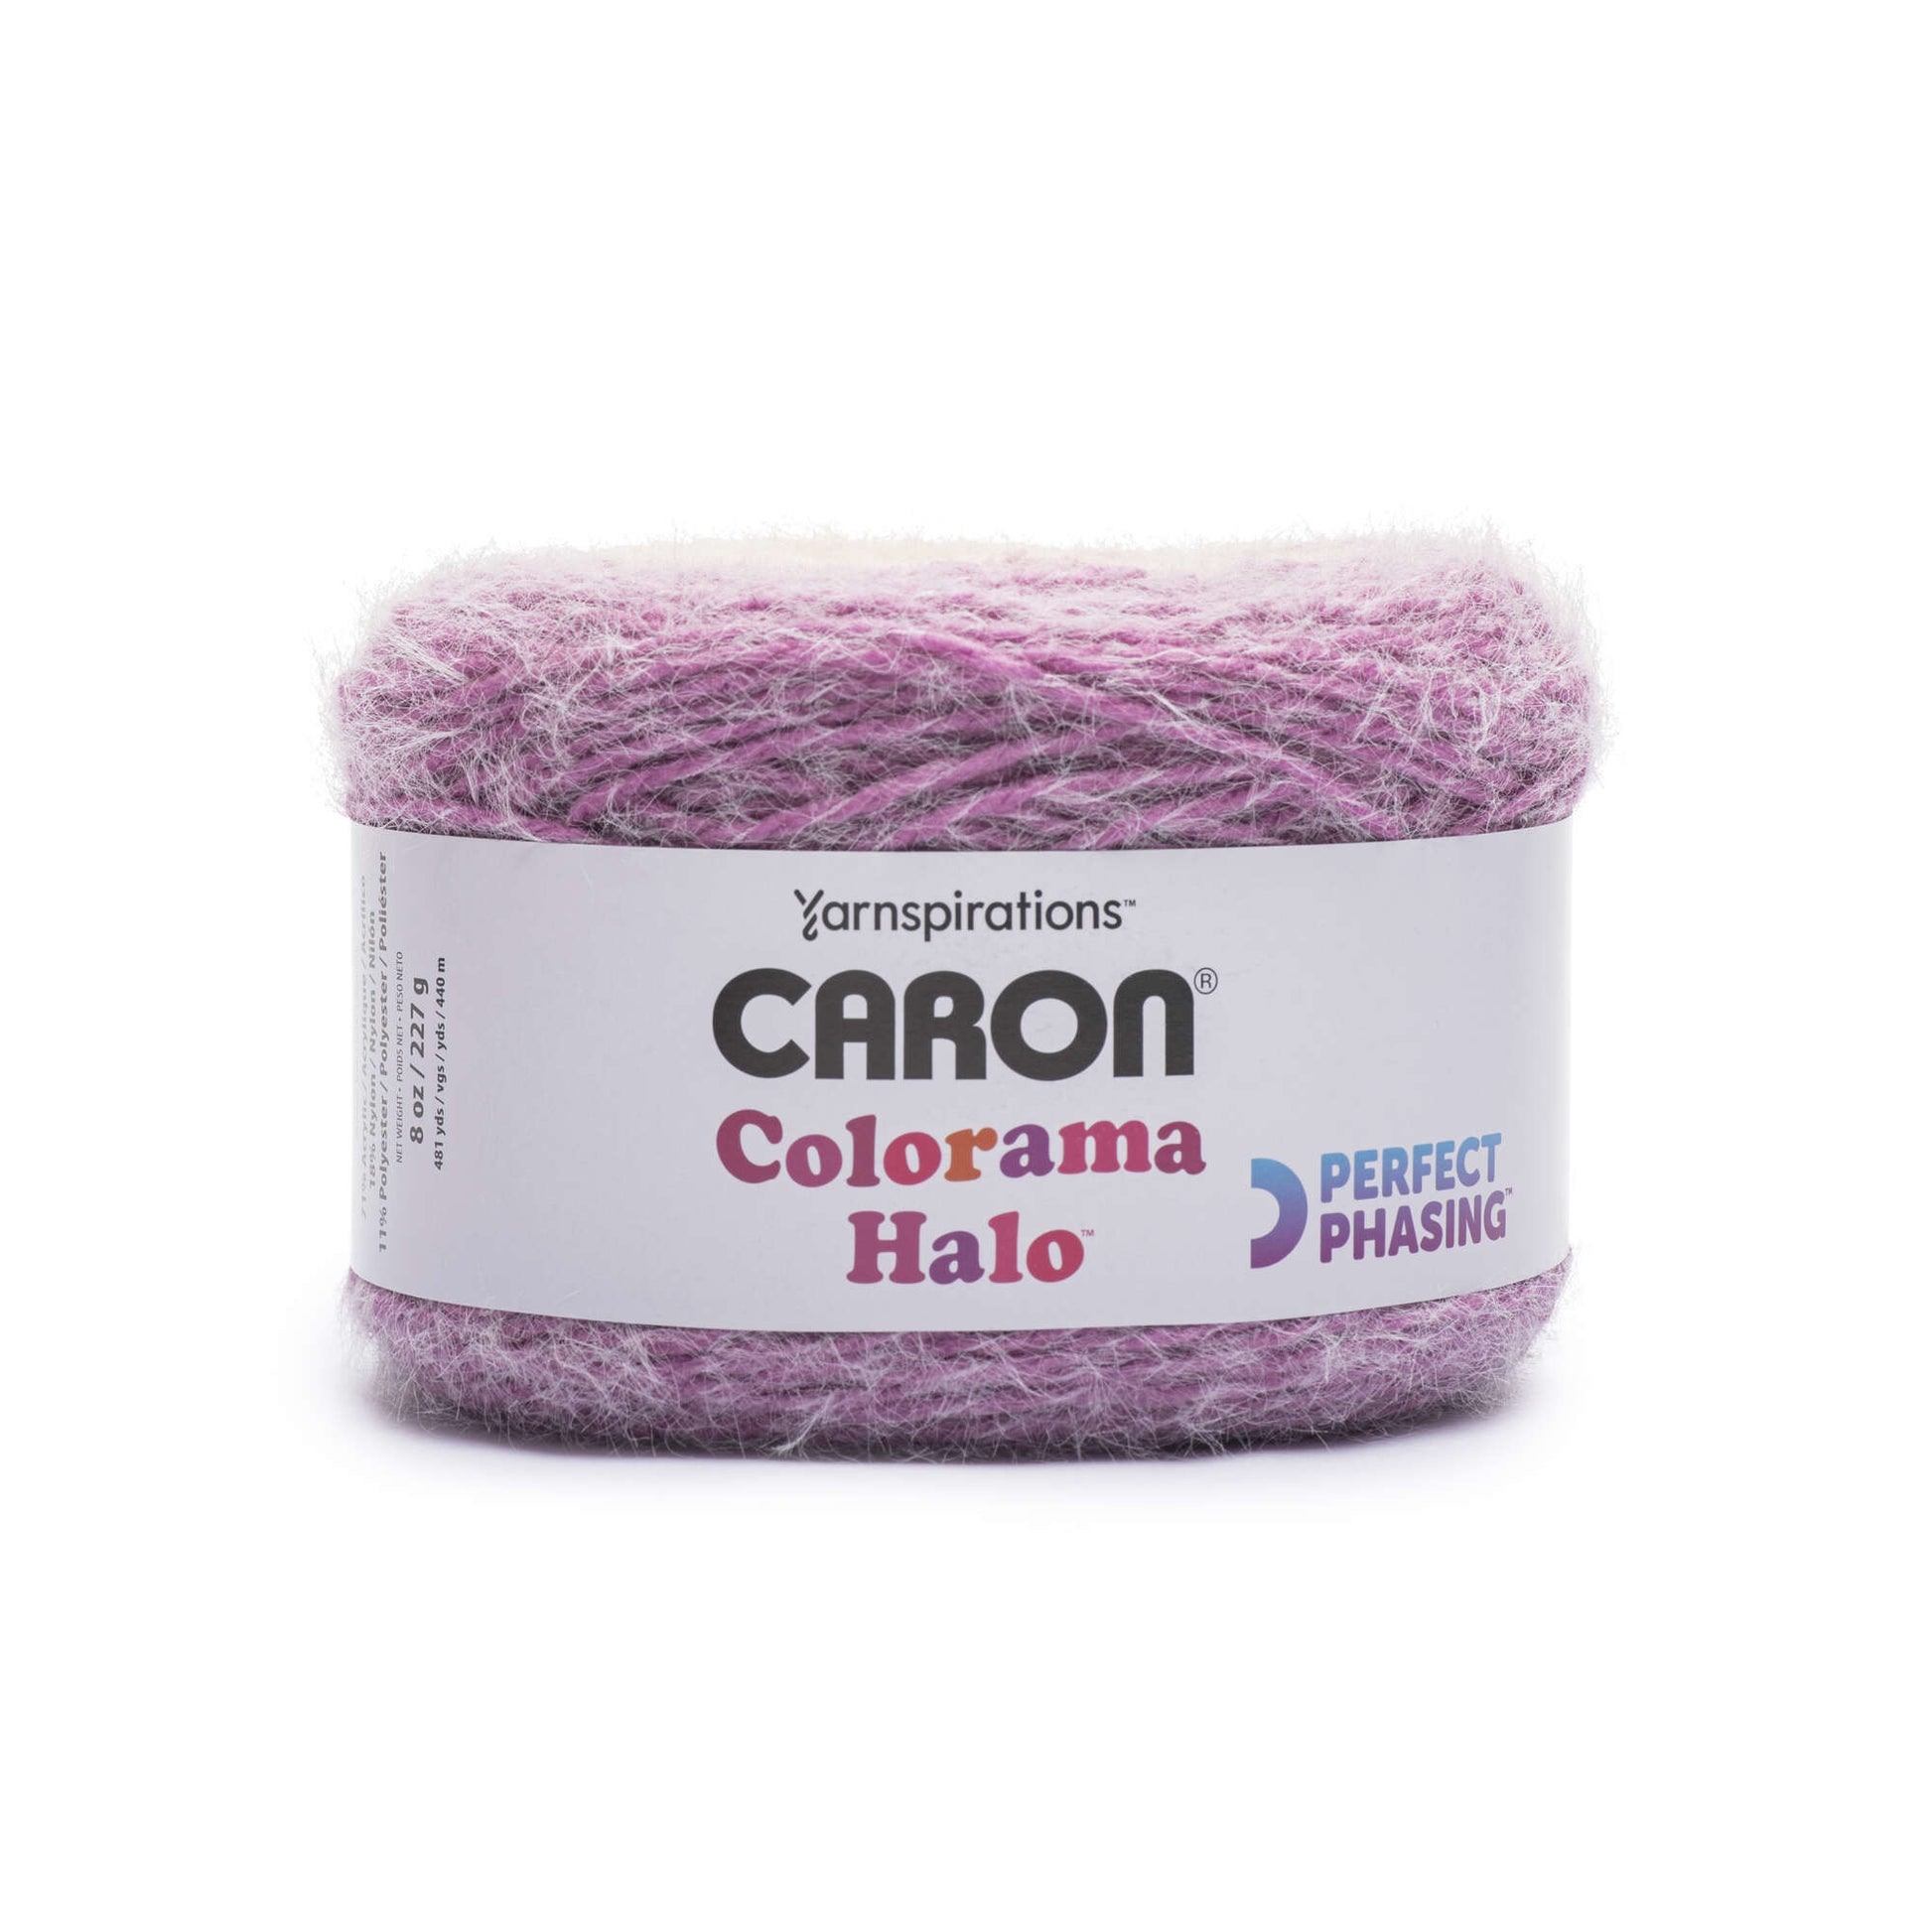 Caron Colorama Halo Yarn (227g/8oz)